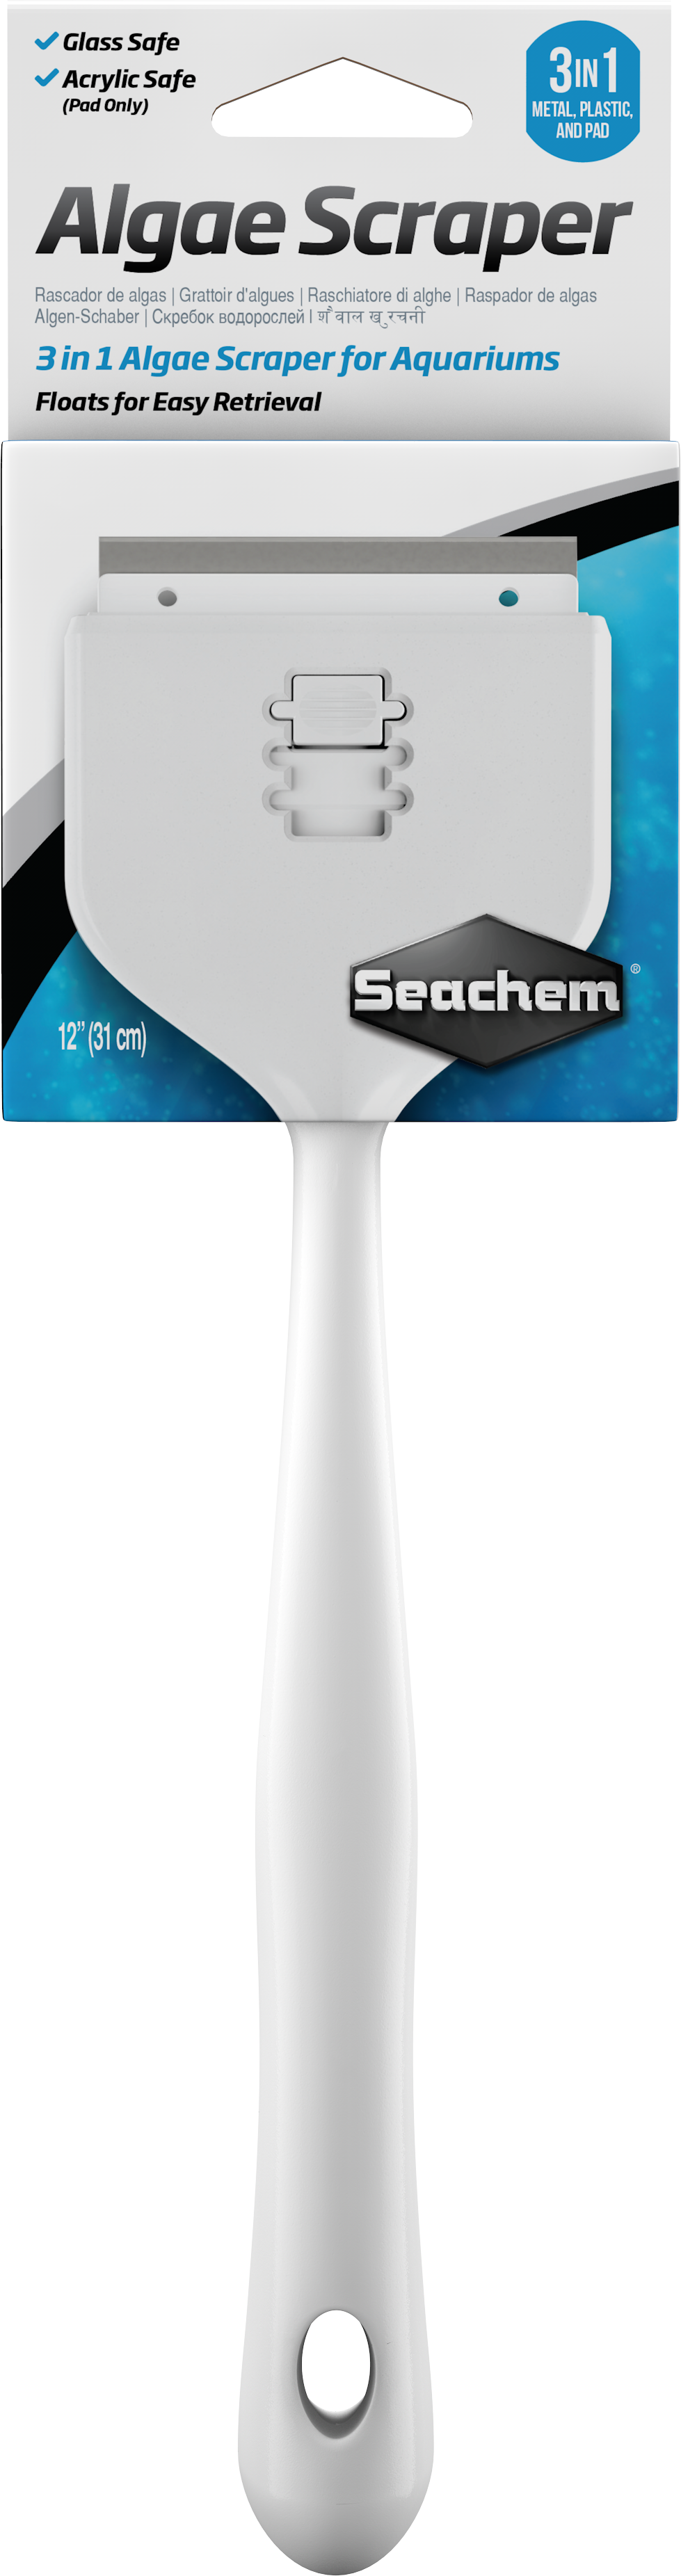 Seachem Algae Scraper